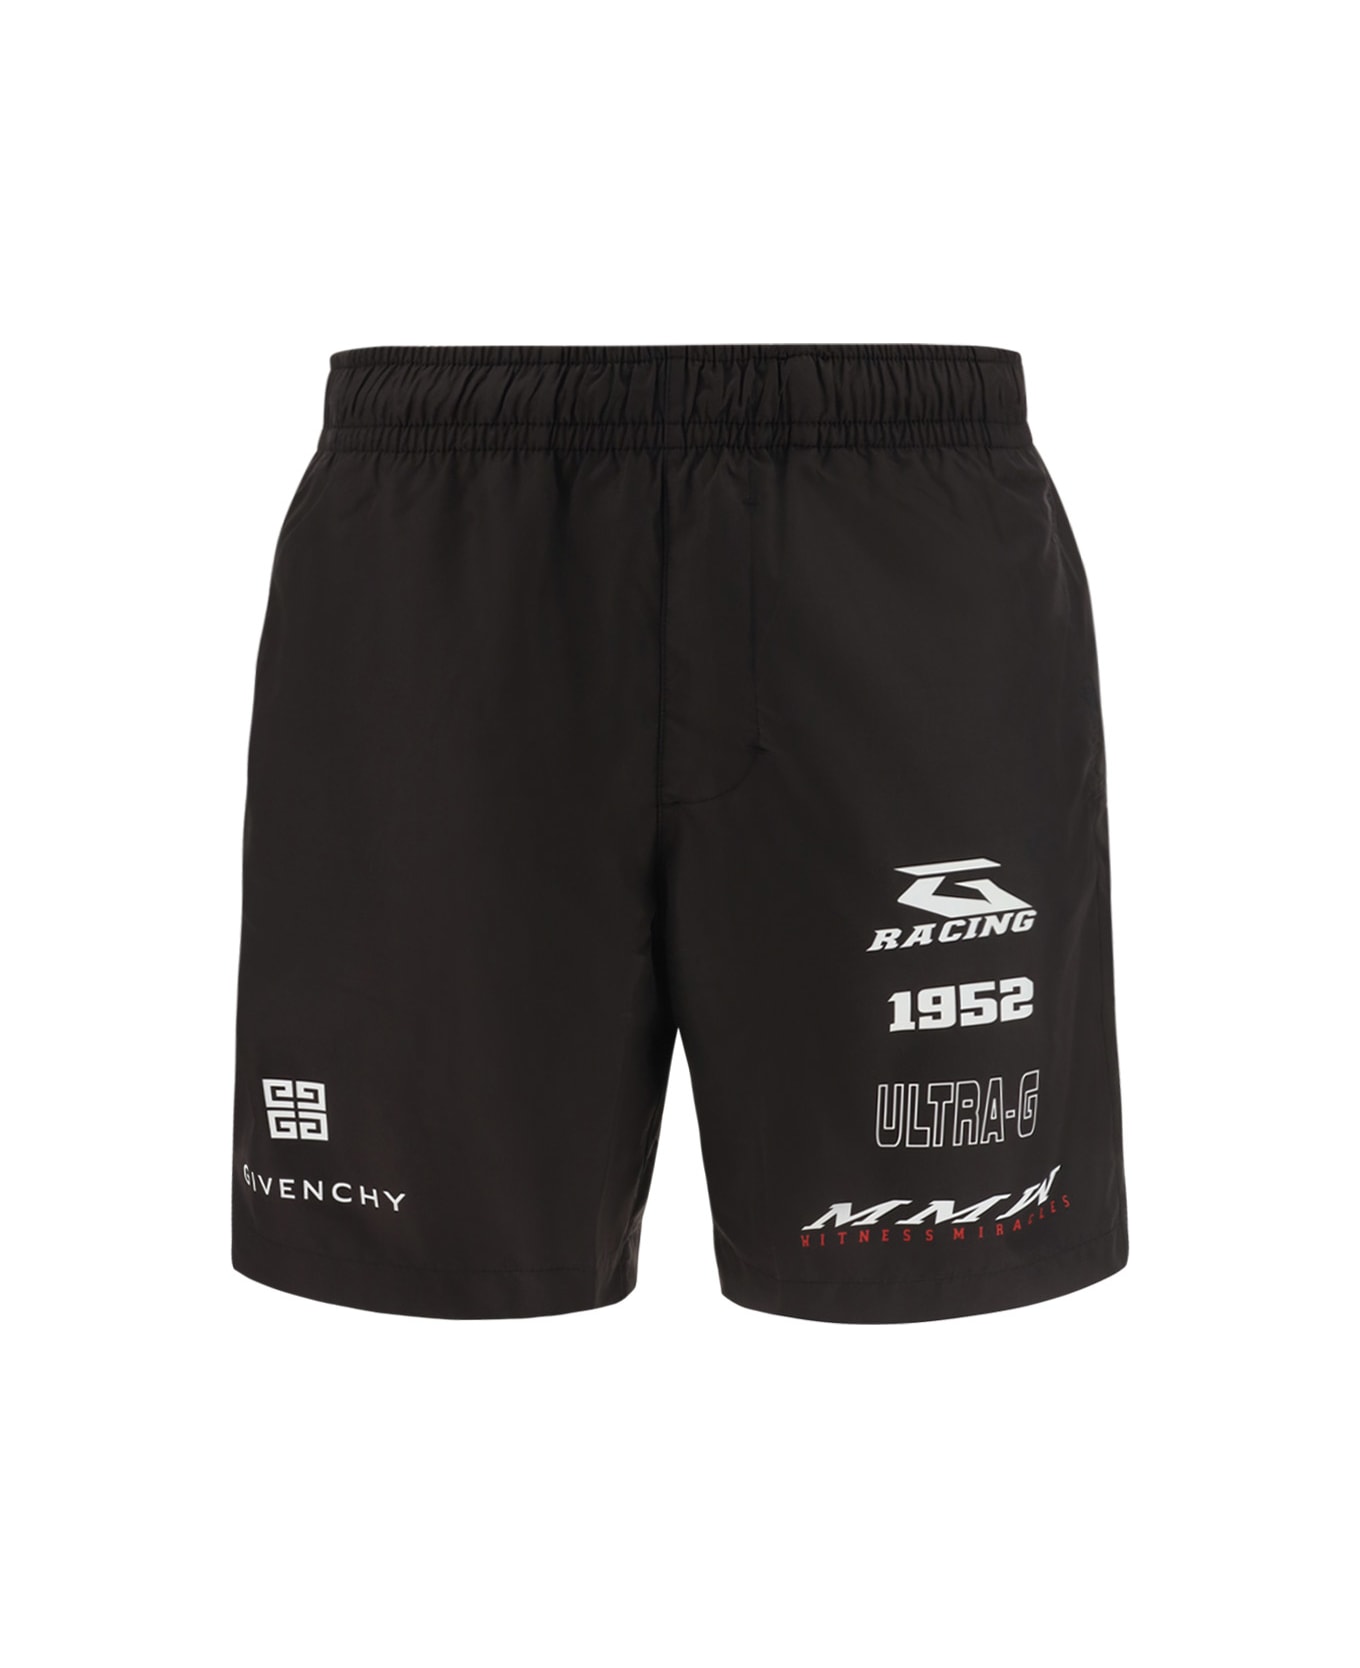 Givenchy Black Polyester Swimming Shorts - Black/white ショートパンツ